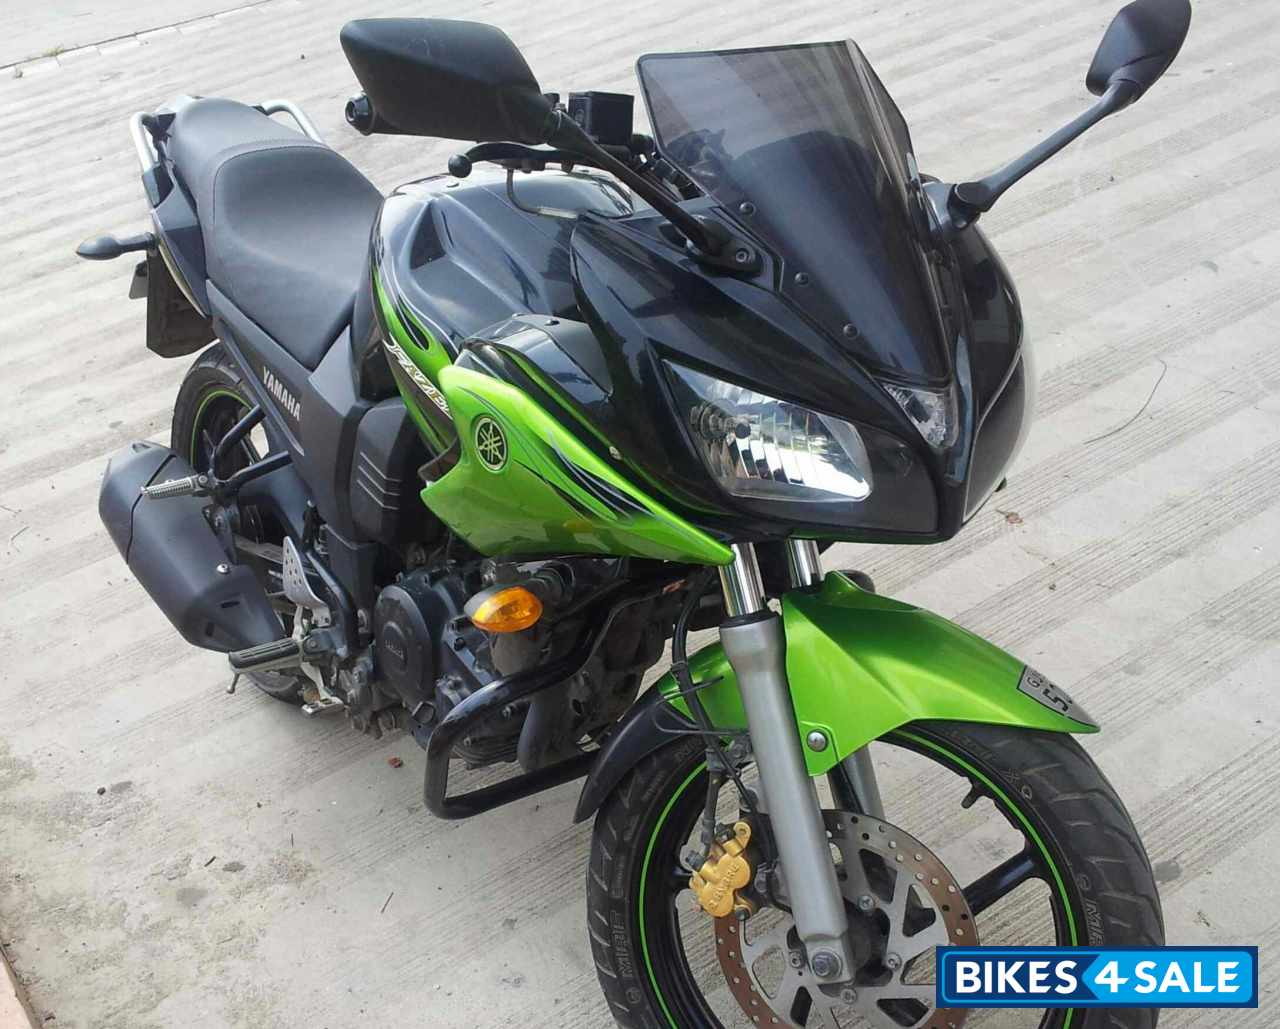 Black & Green Yamaha FZ16